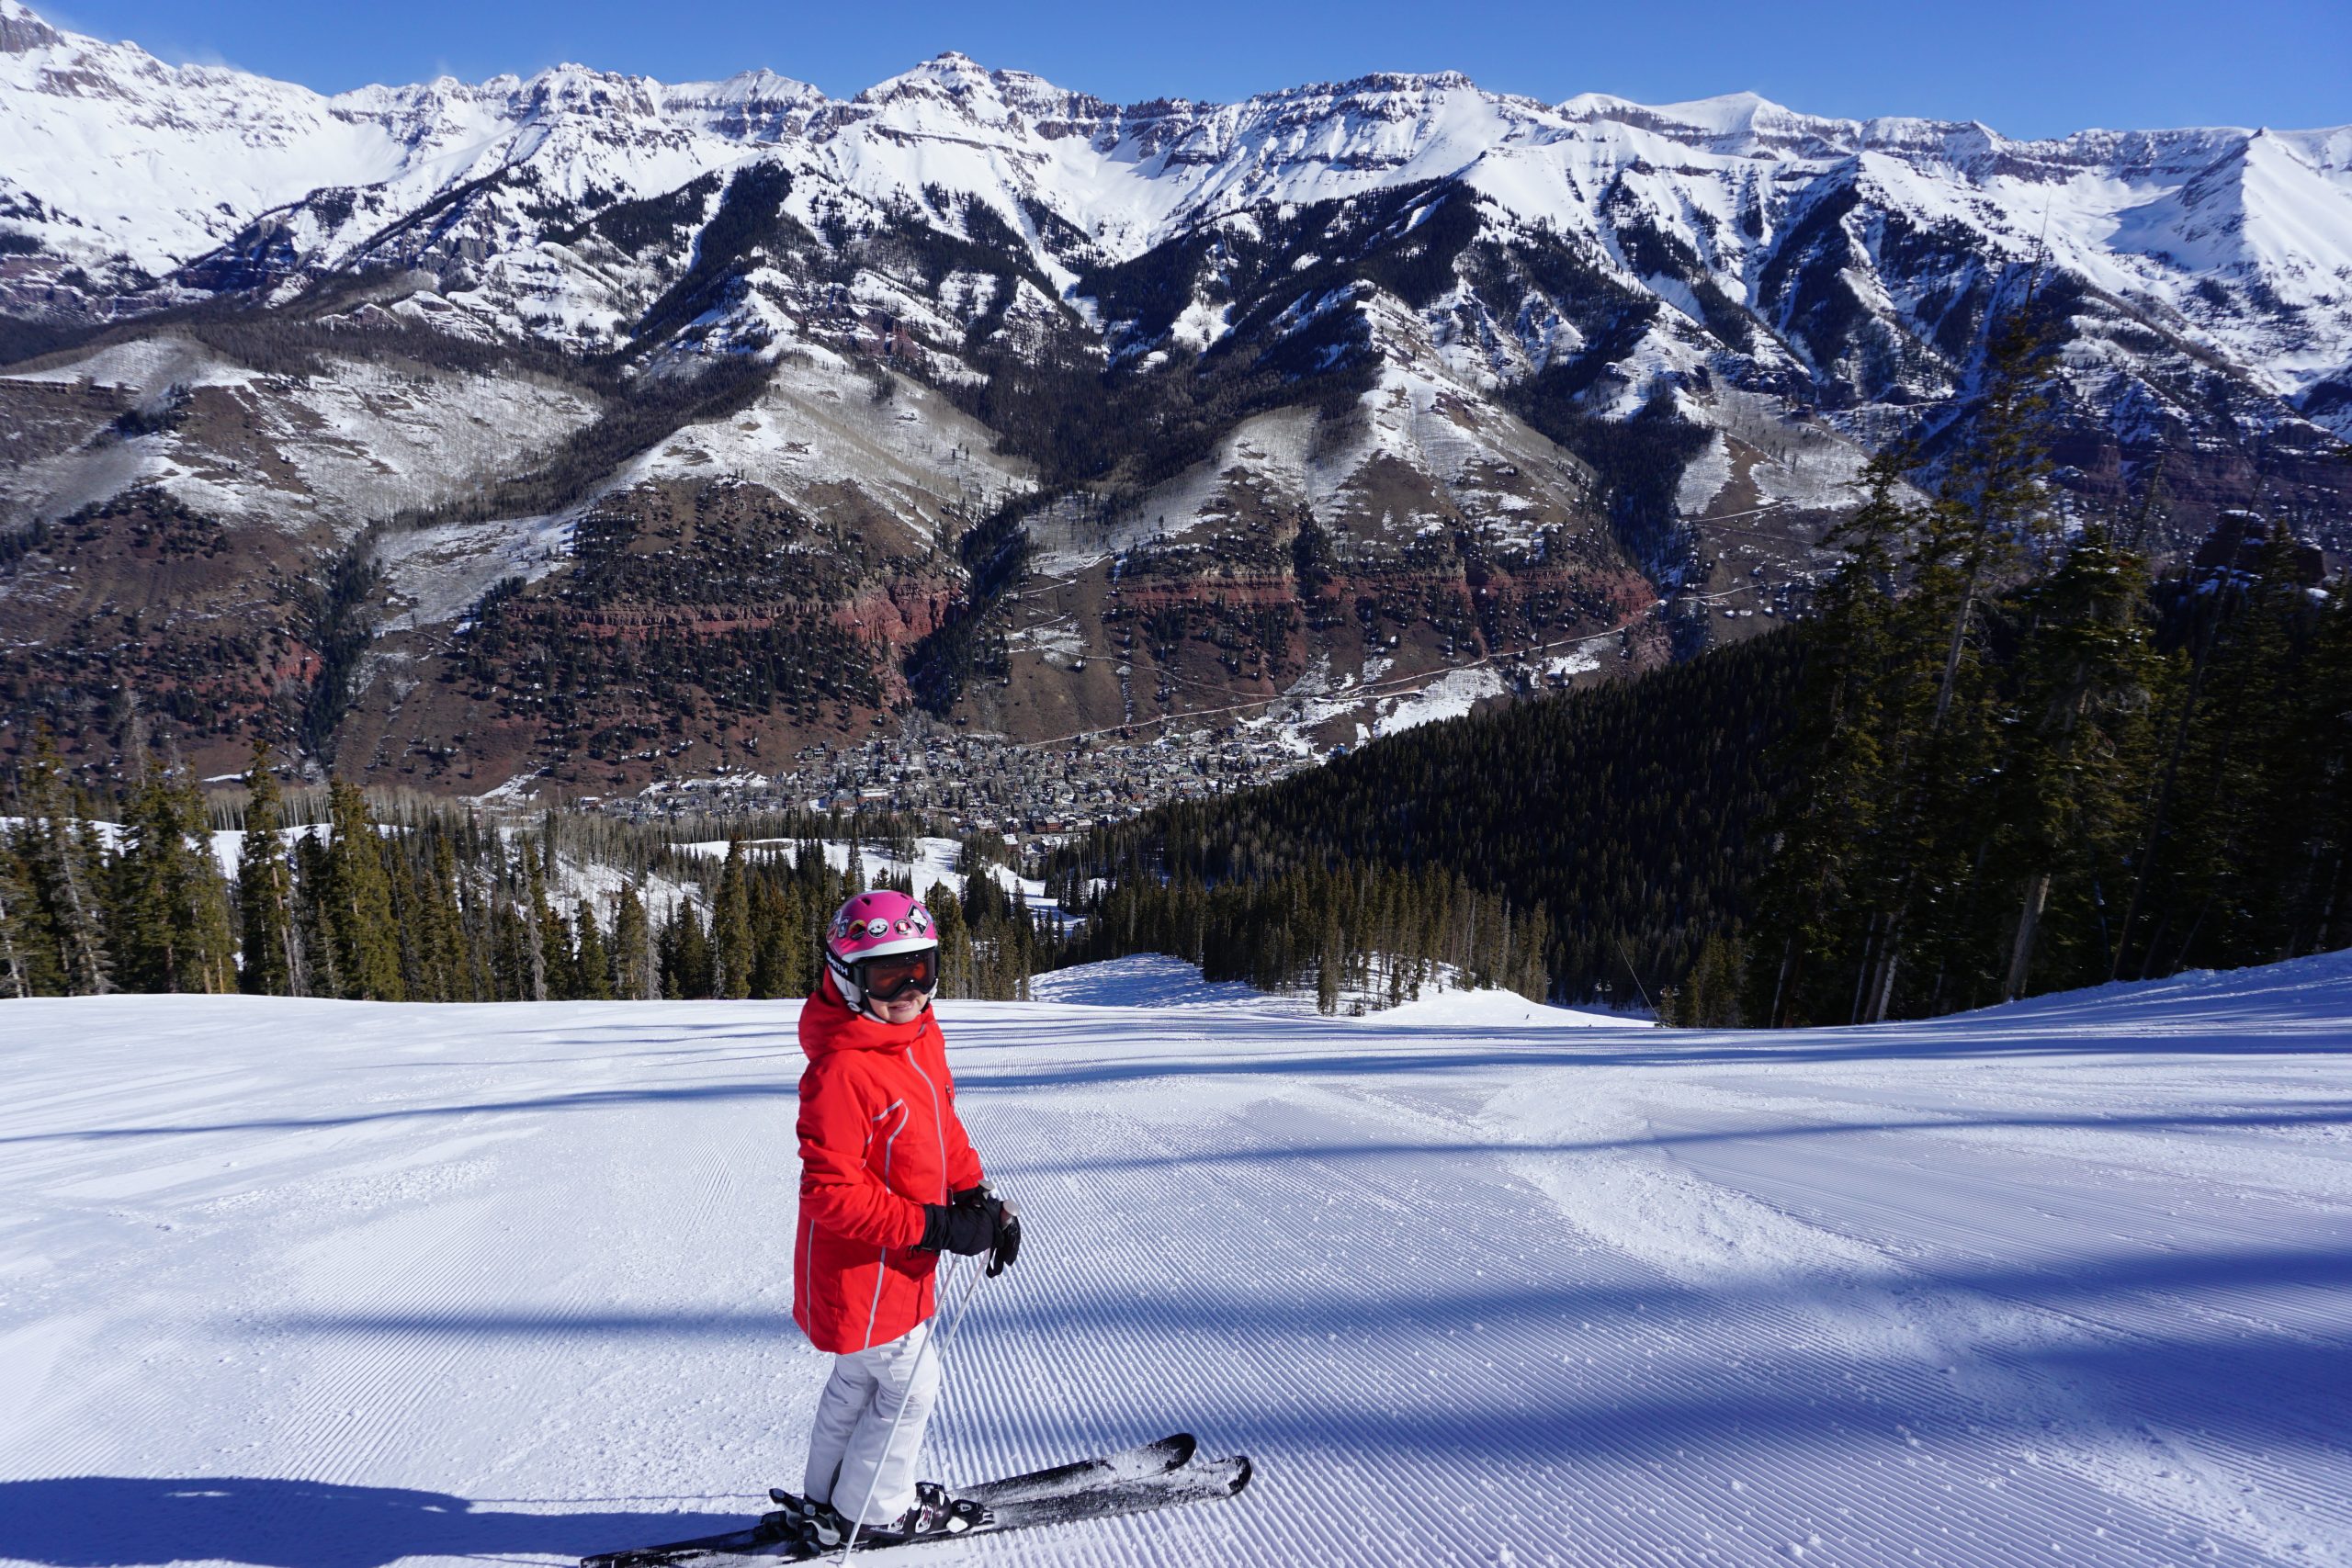 Top 100 ski resorts - Overall rankings - Ski North America's Top